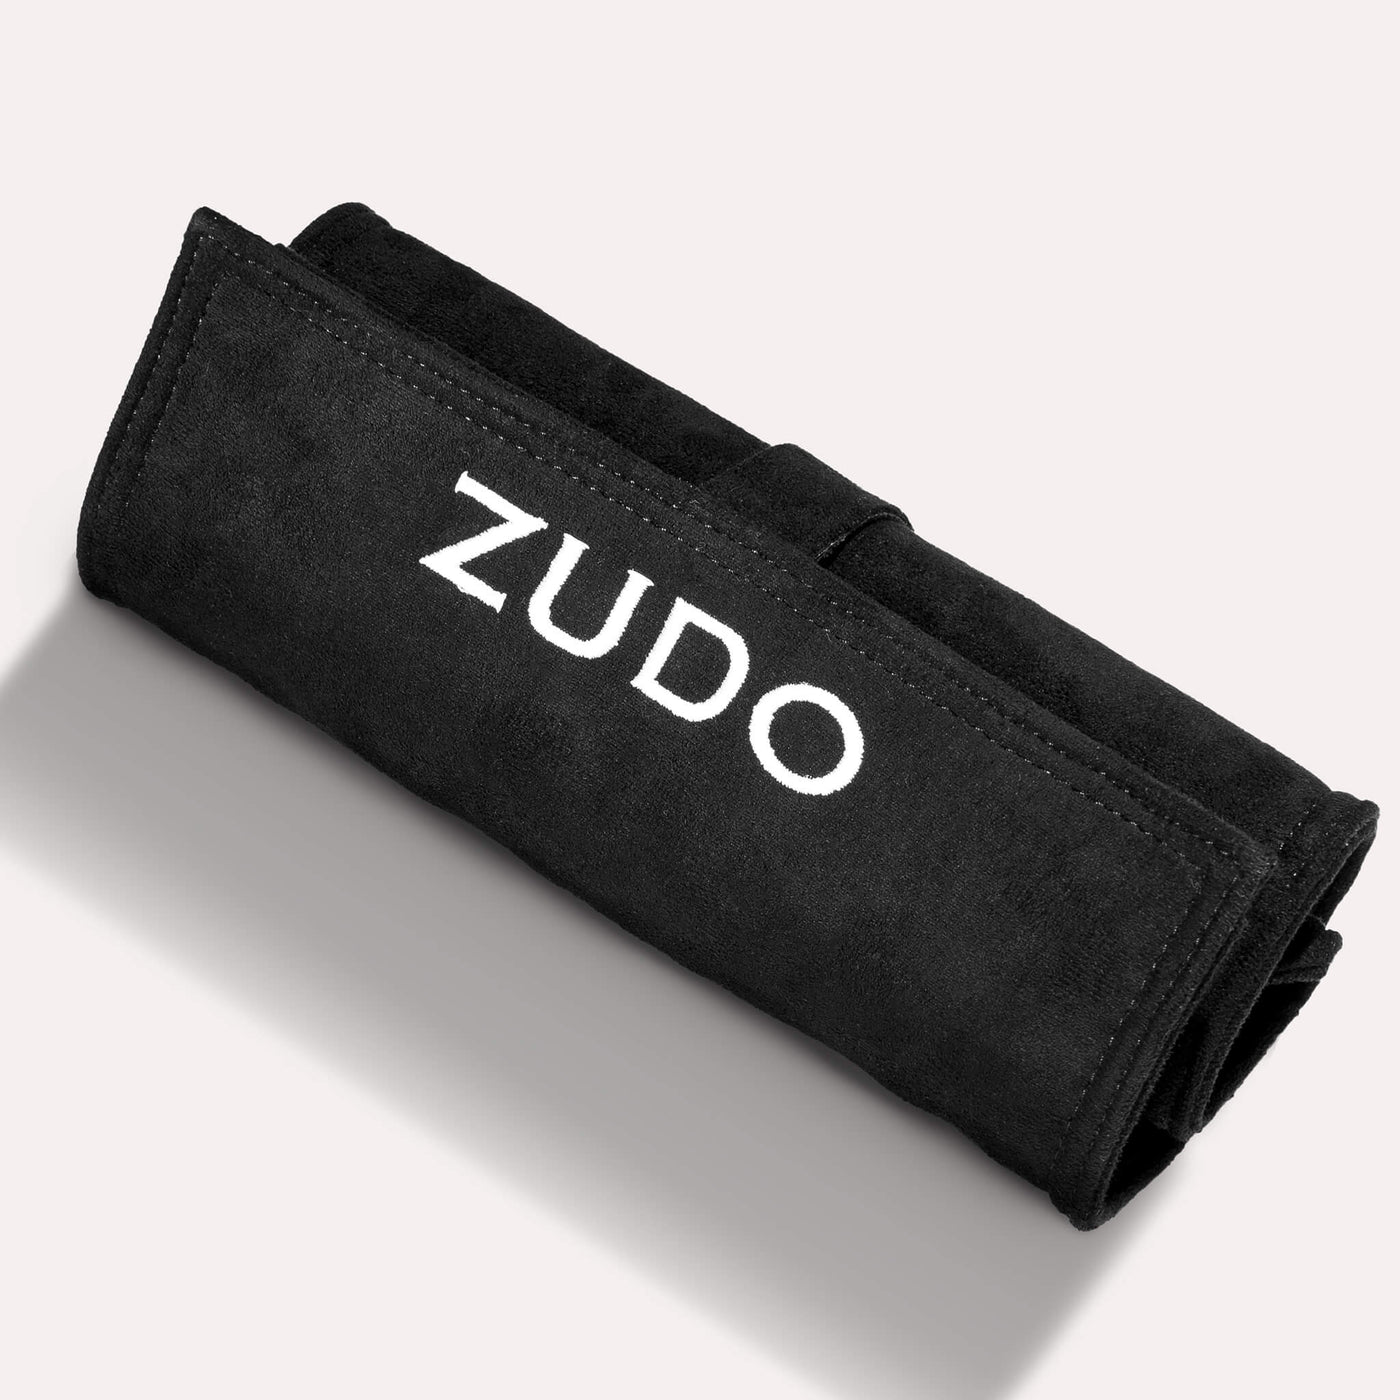 ZUDO-Treasured-jewelry-organizer